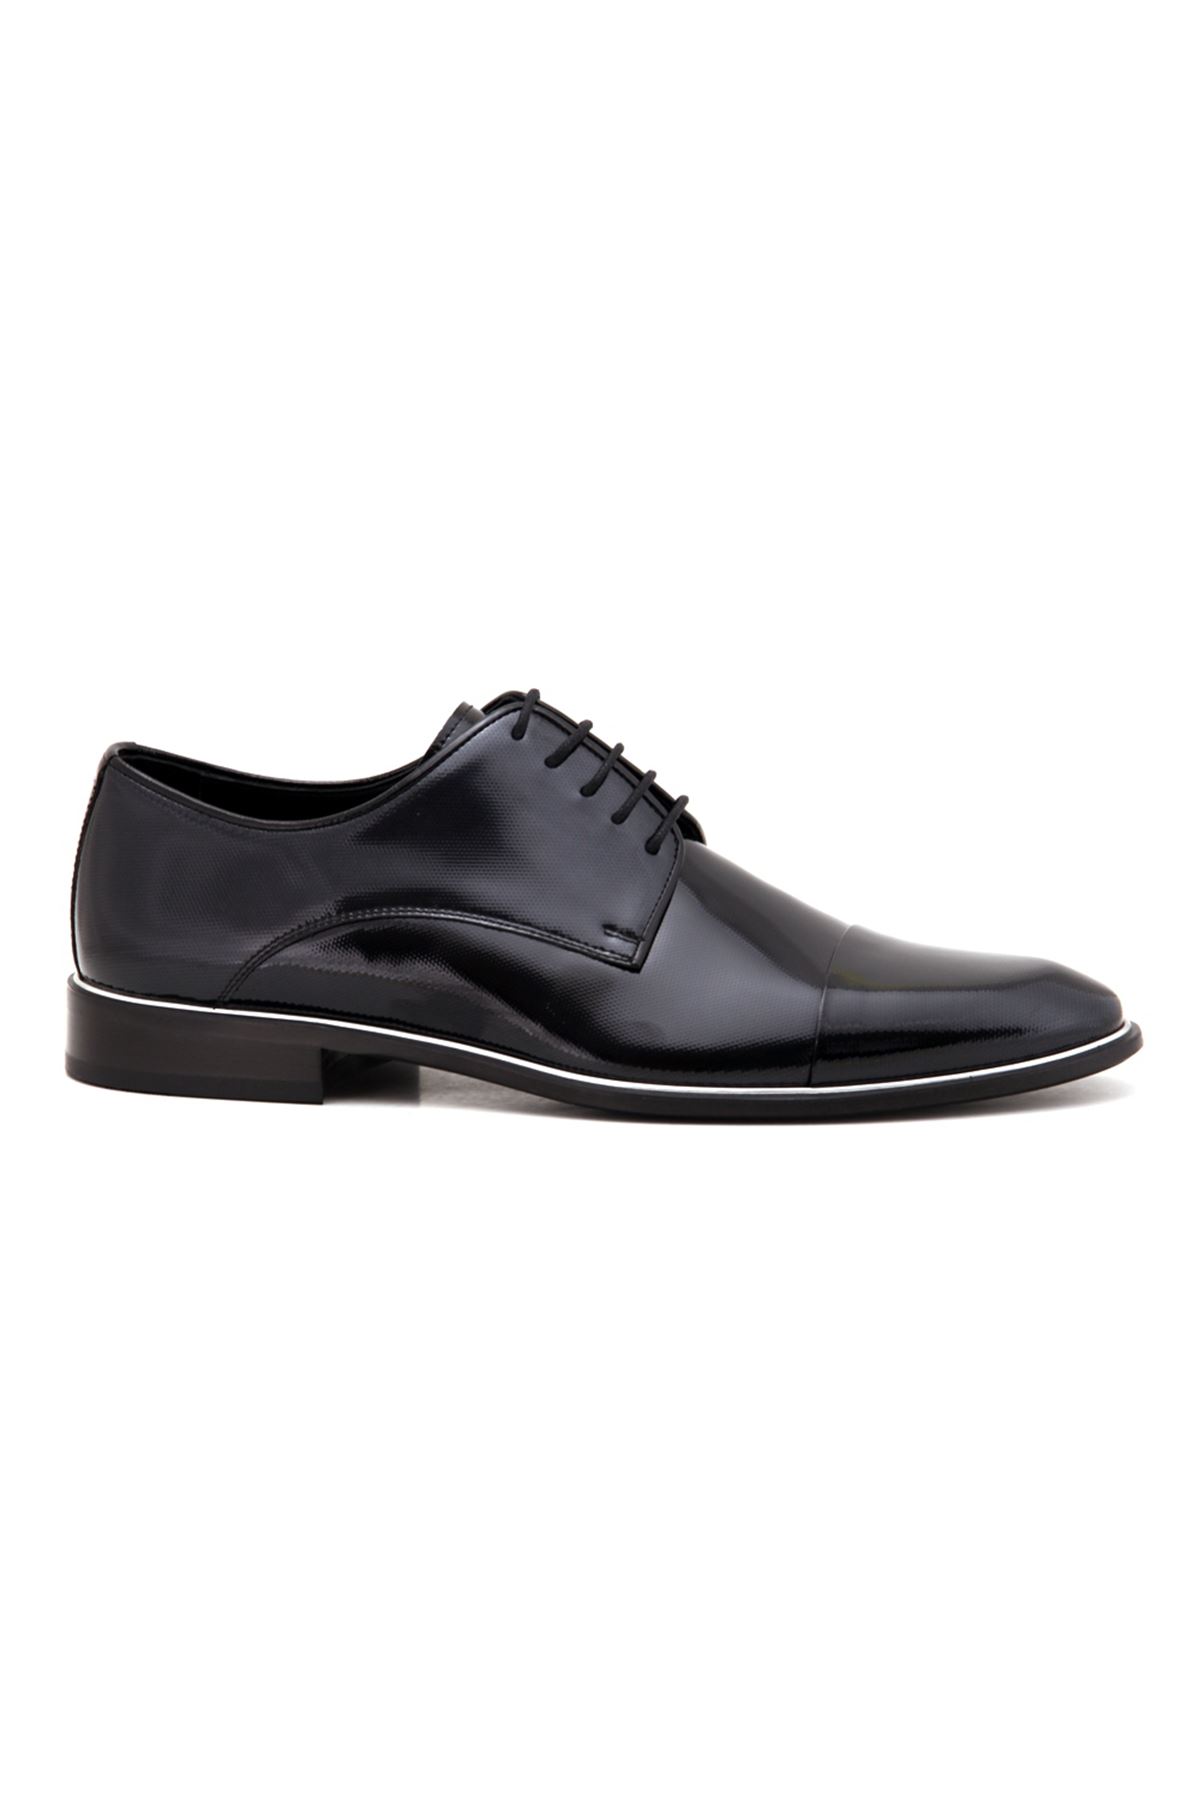 2474 Libero Klasik Erkek Ayakkabı - Siyah Rugan